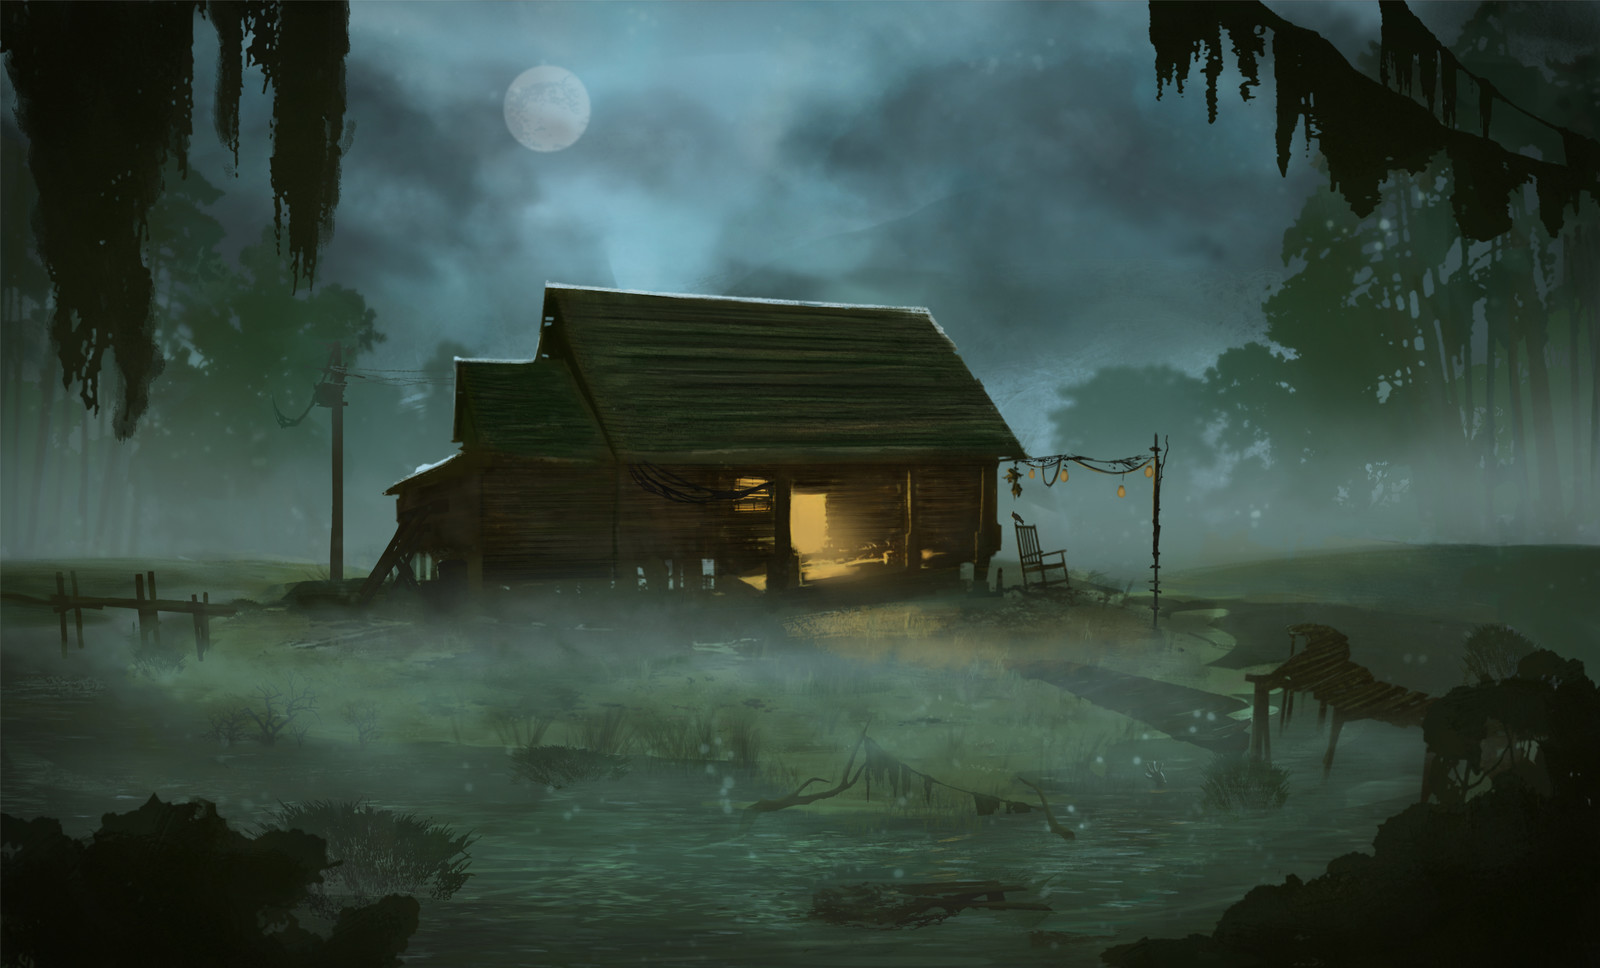 The swamp house